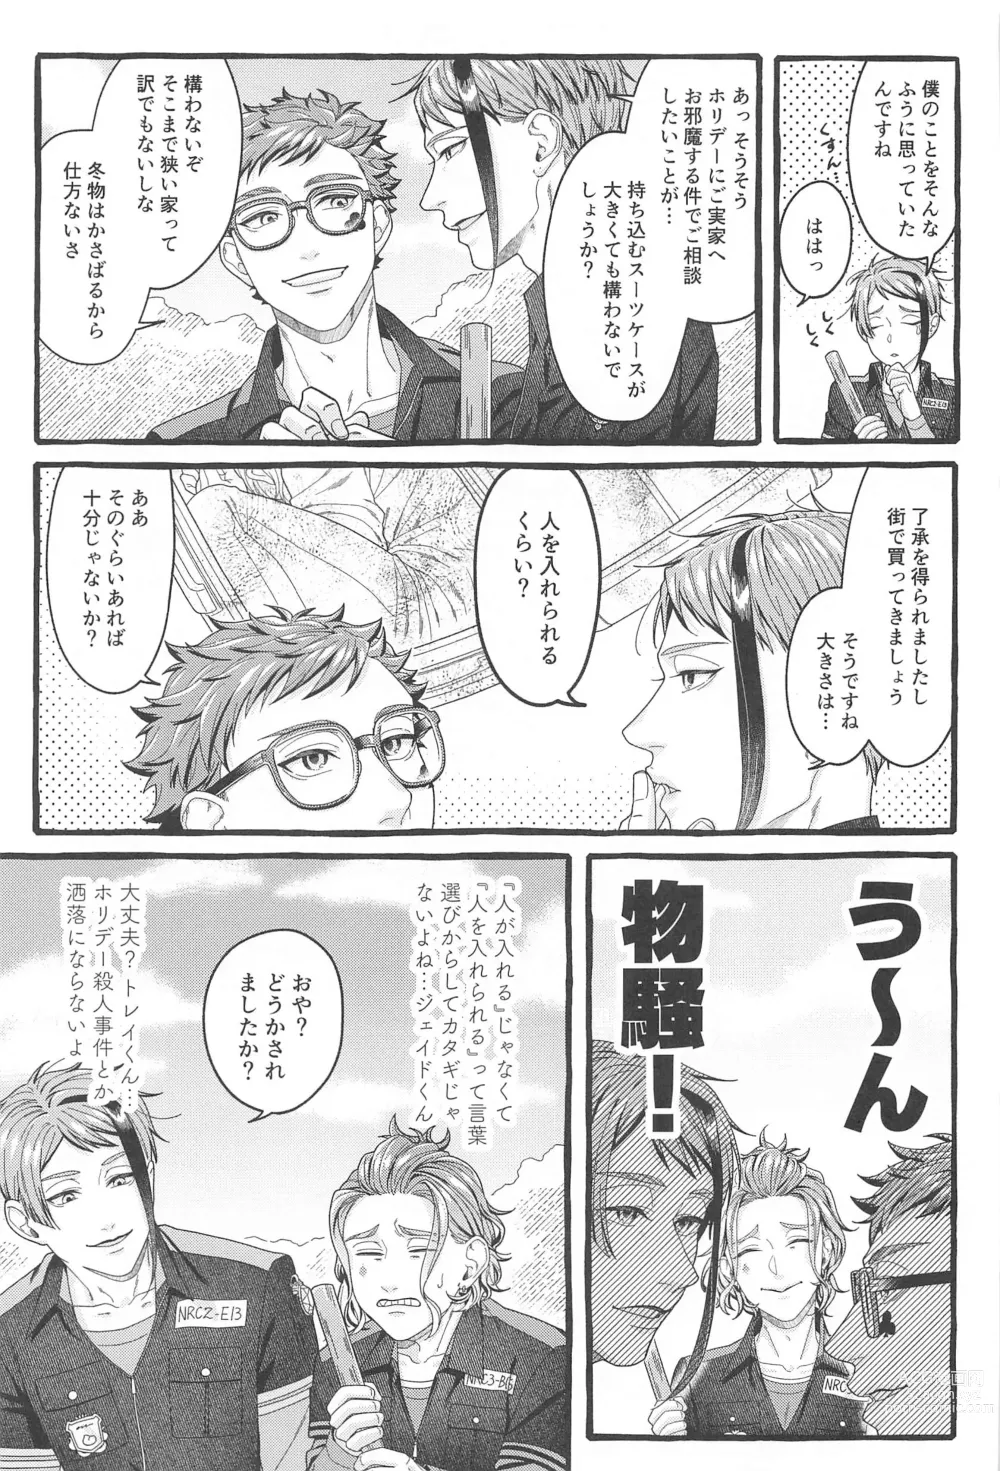 Page 10 of doujinshi Oniaino Futari